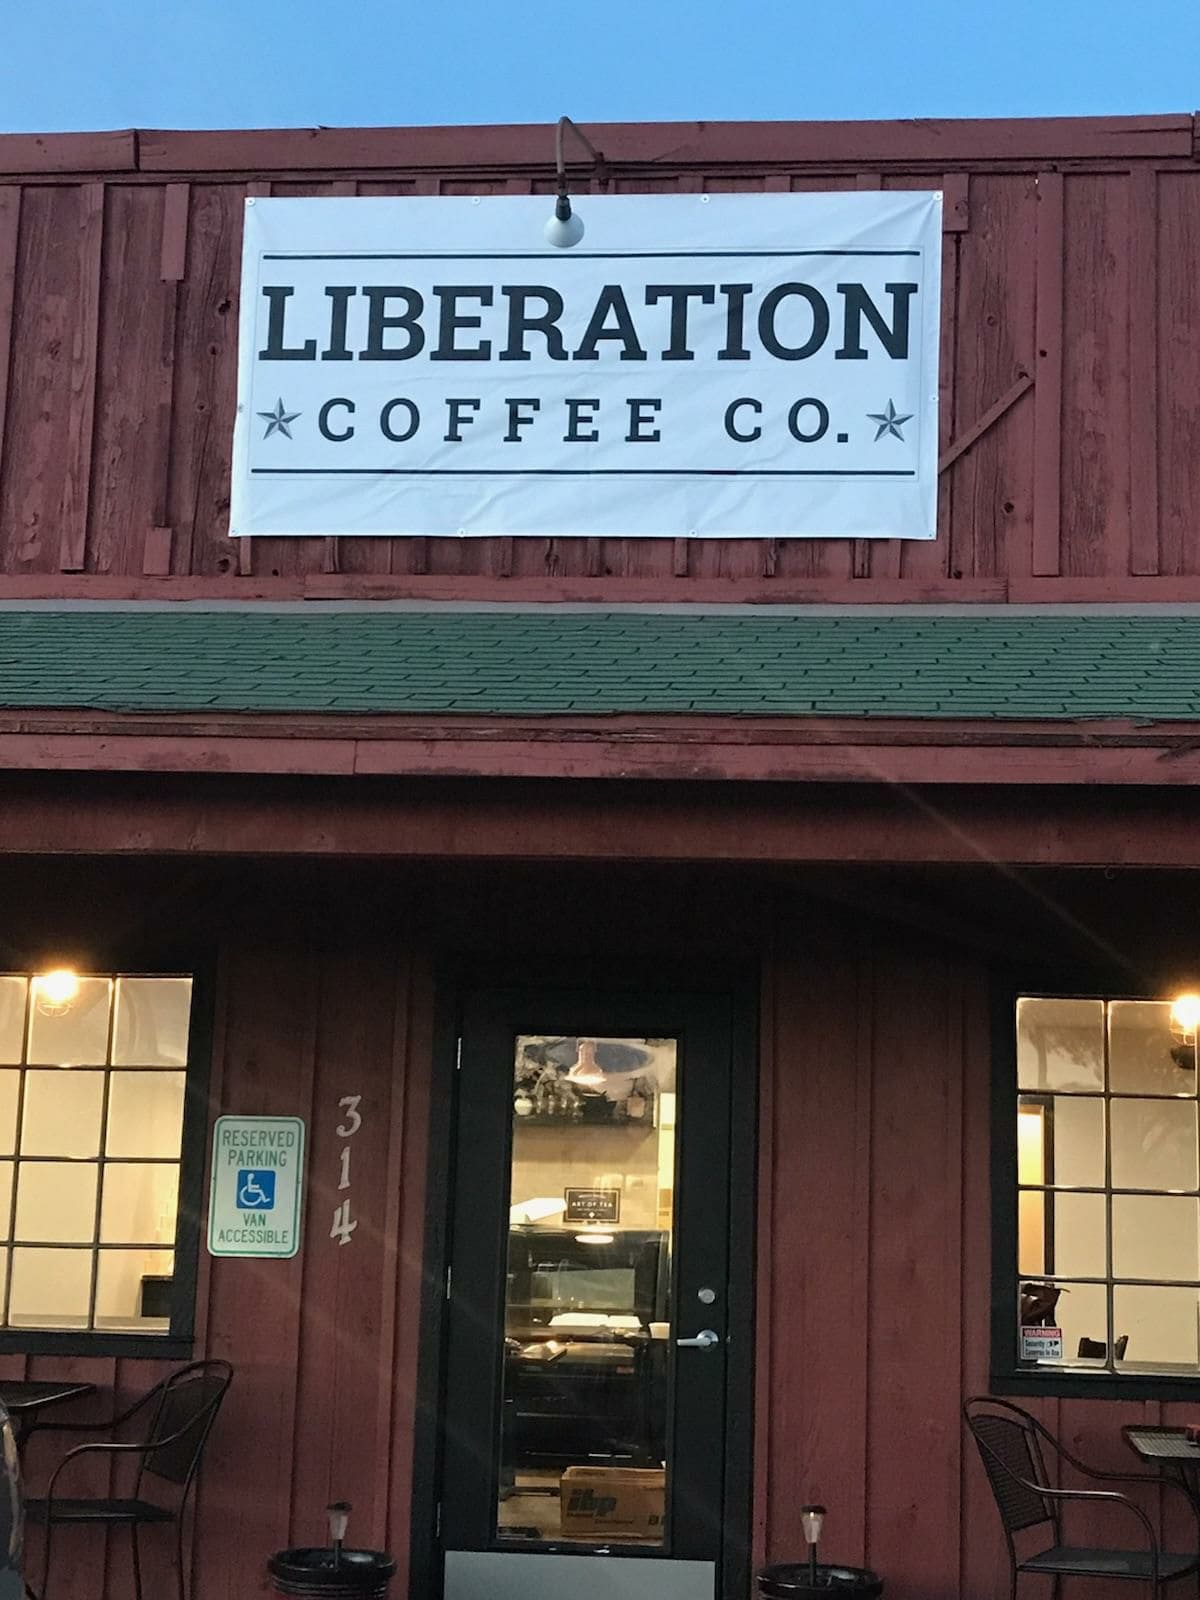 Liberation Coffee Co. - Lake Dallas, TX, US, city coffee house